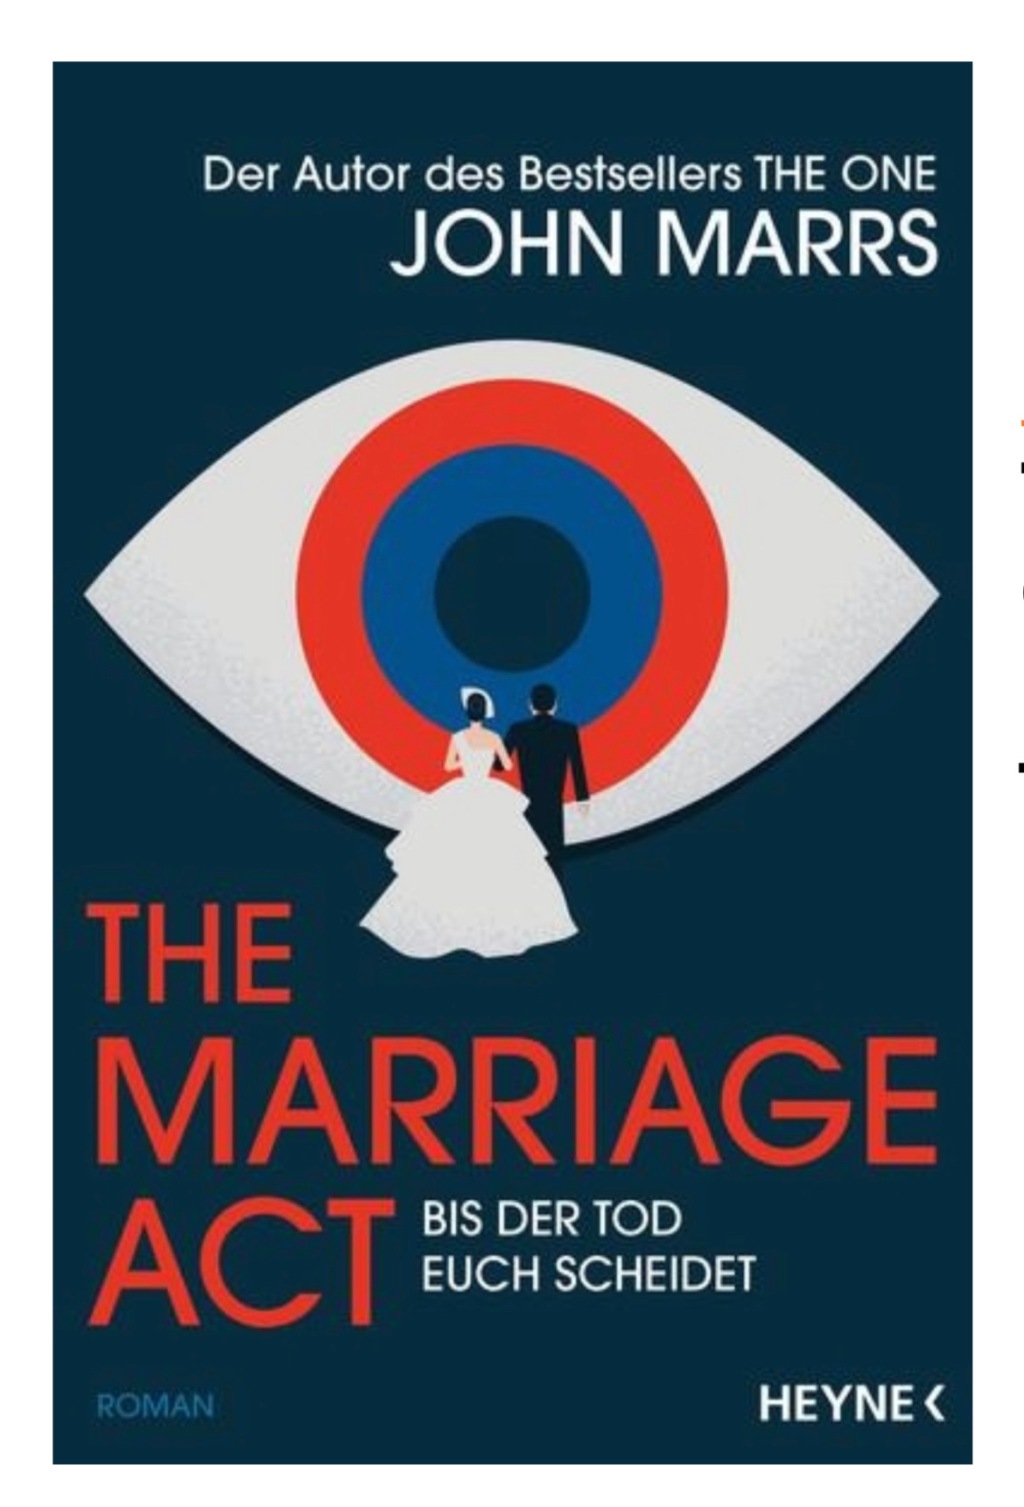 THE MARRIAGE ACT – John Marrs